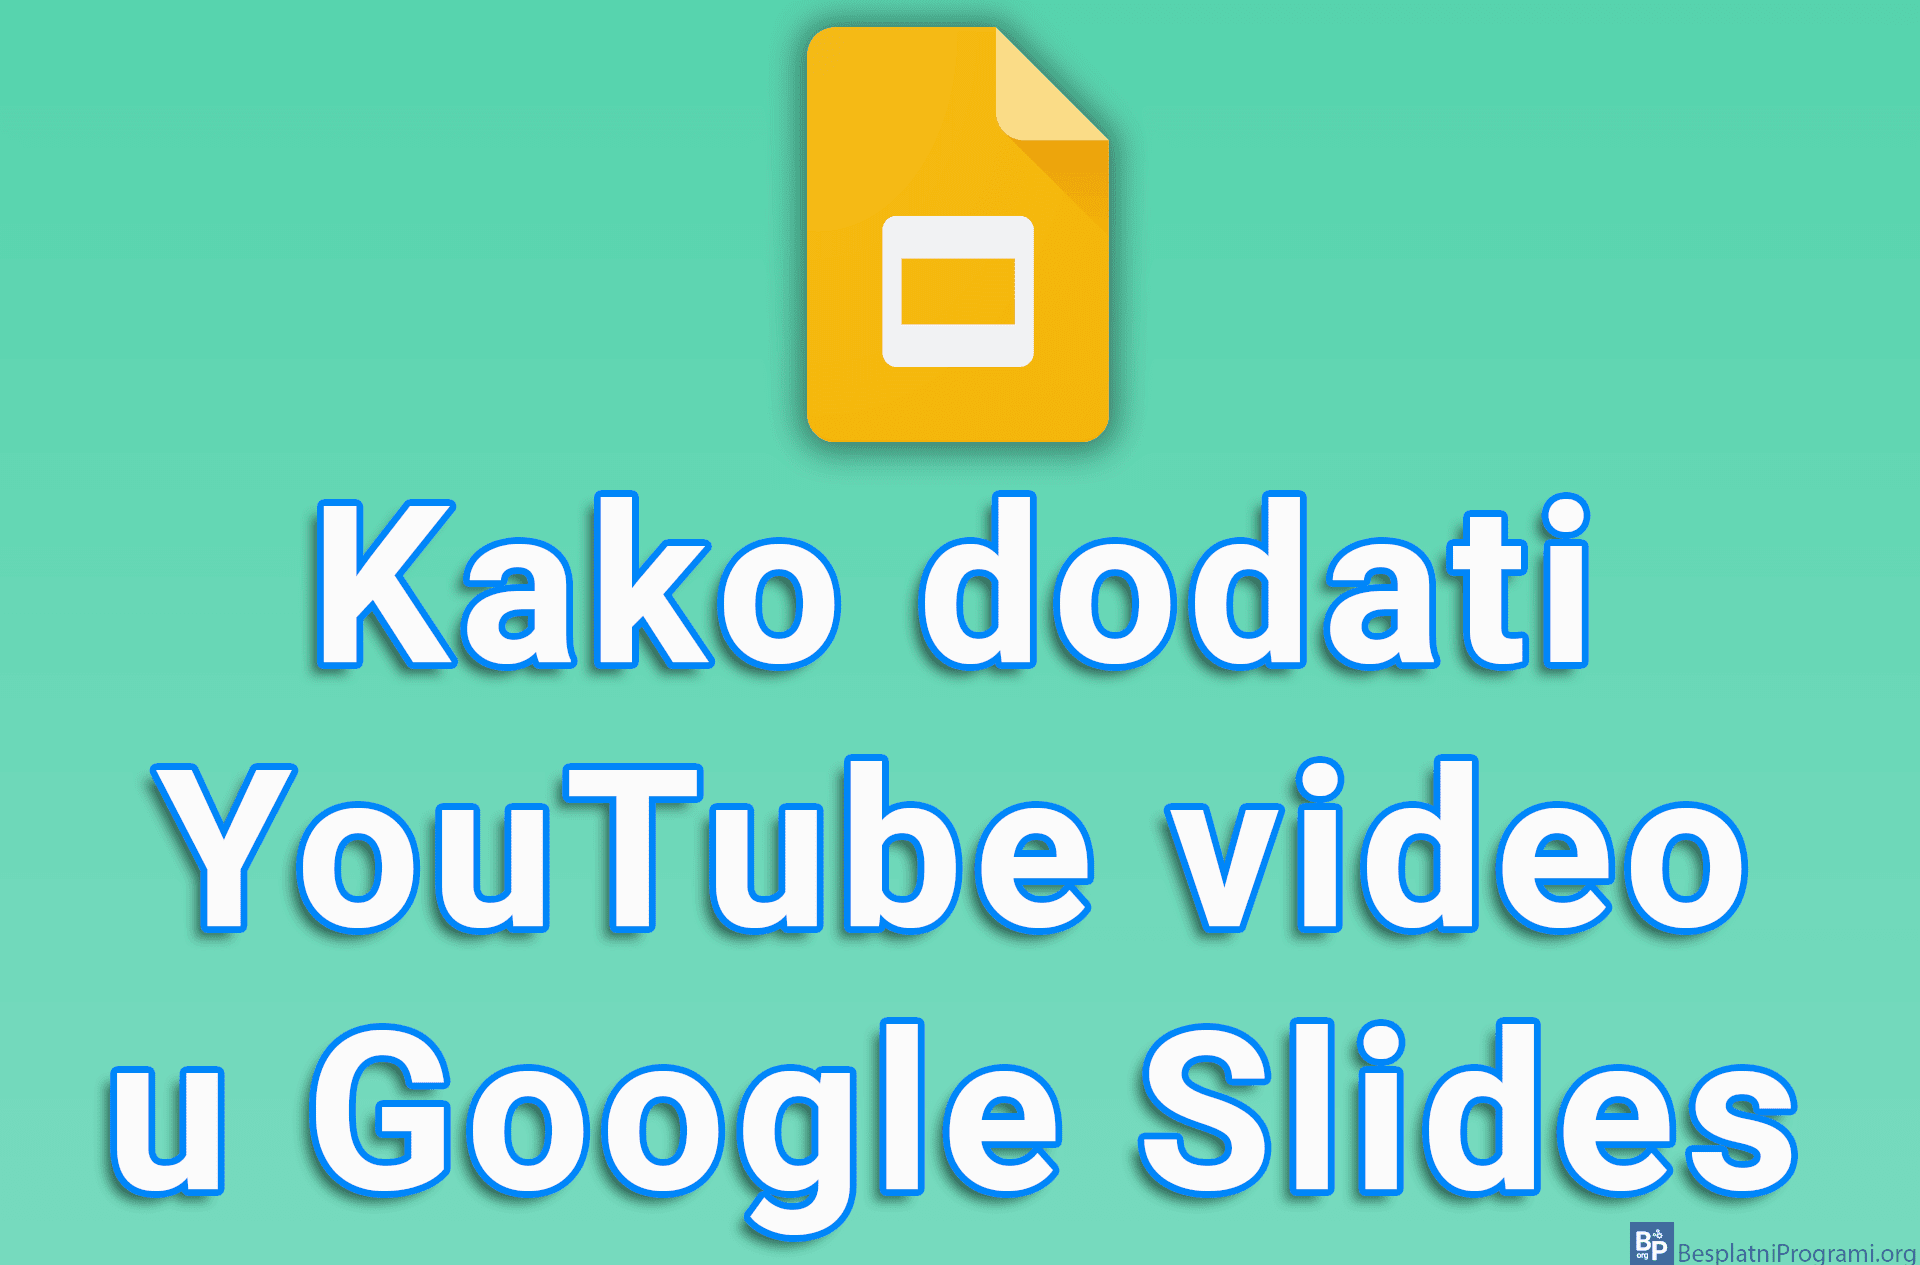 Kako dodati YouTube video u Google Slides